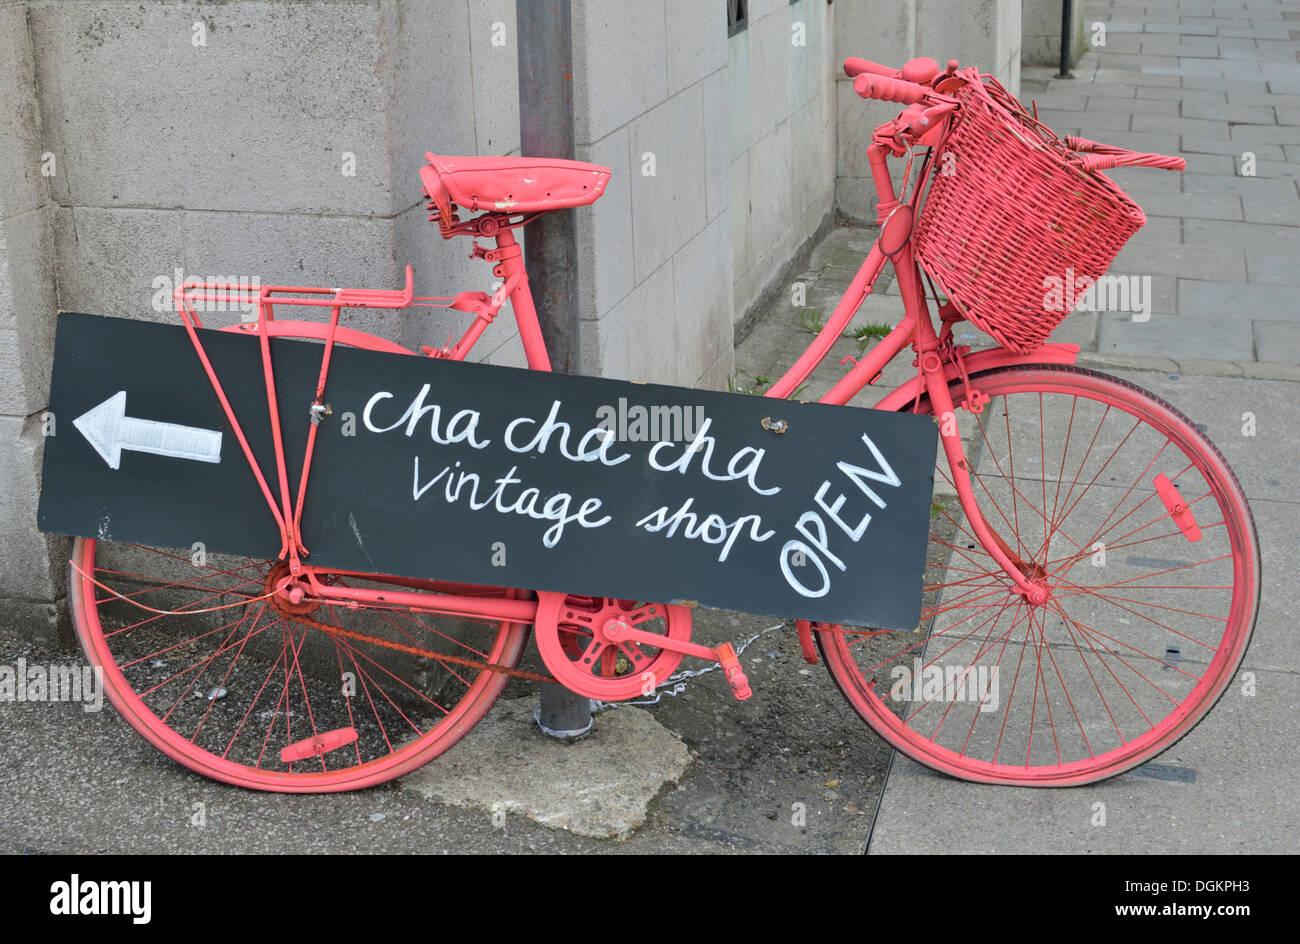 A bright pink bicycle advertising Cha Cha Cha vintage shop. Stock Photo